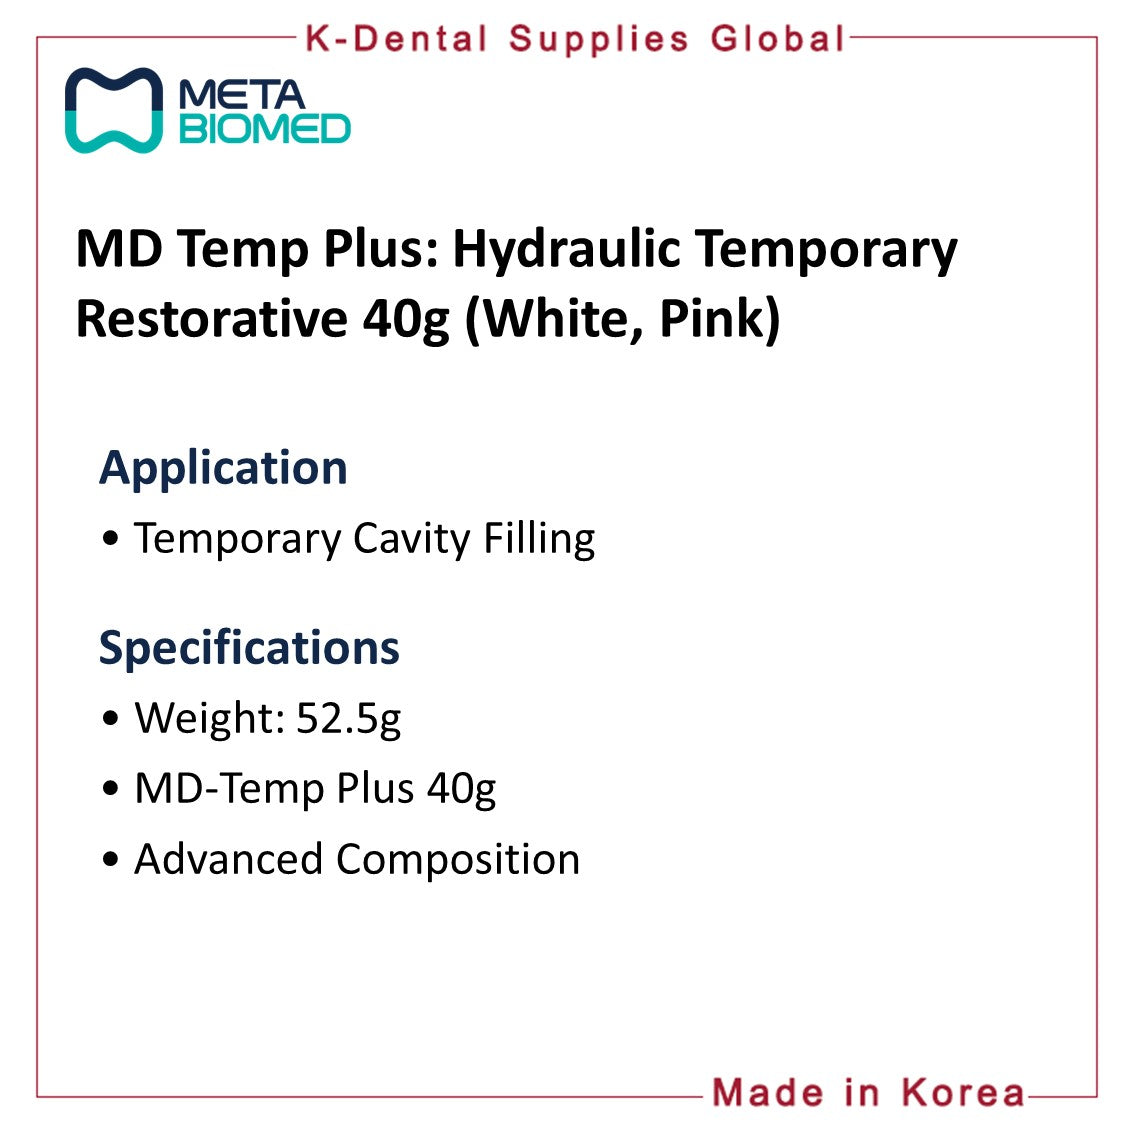 MD Temp Plus Hydraulic Temporary Restorative 40g (White, Pink)